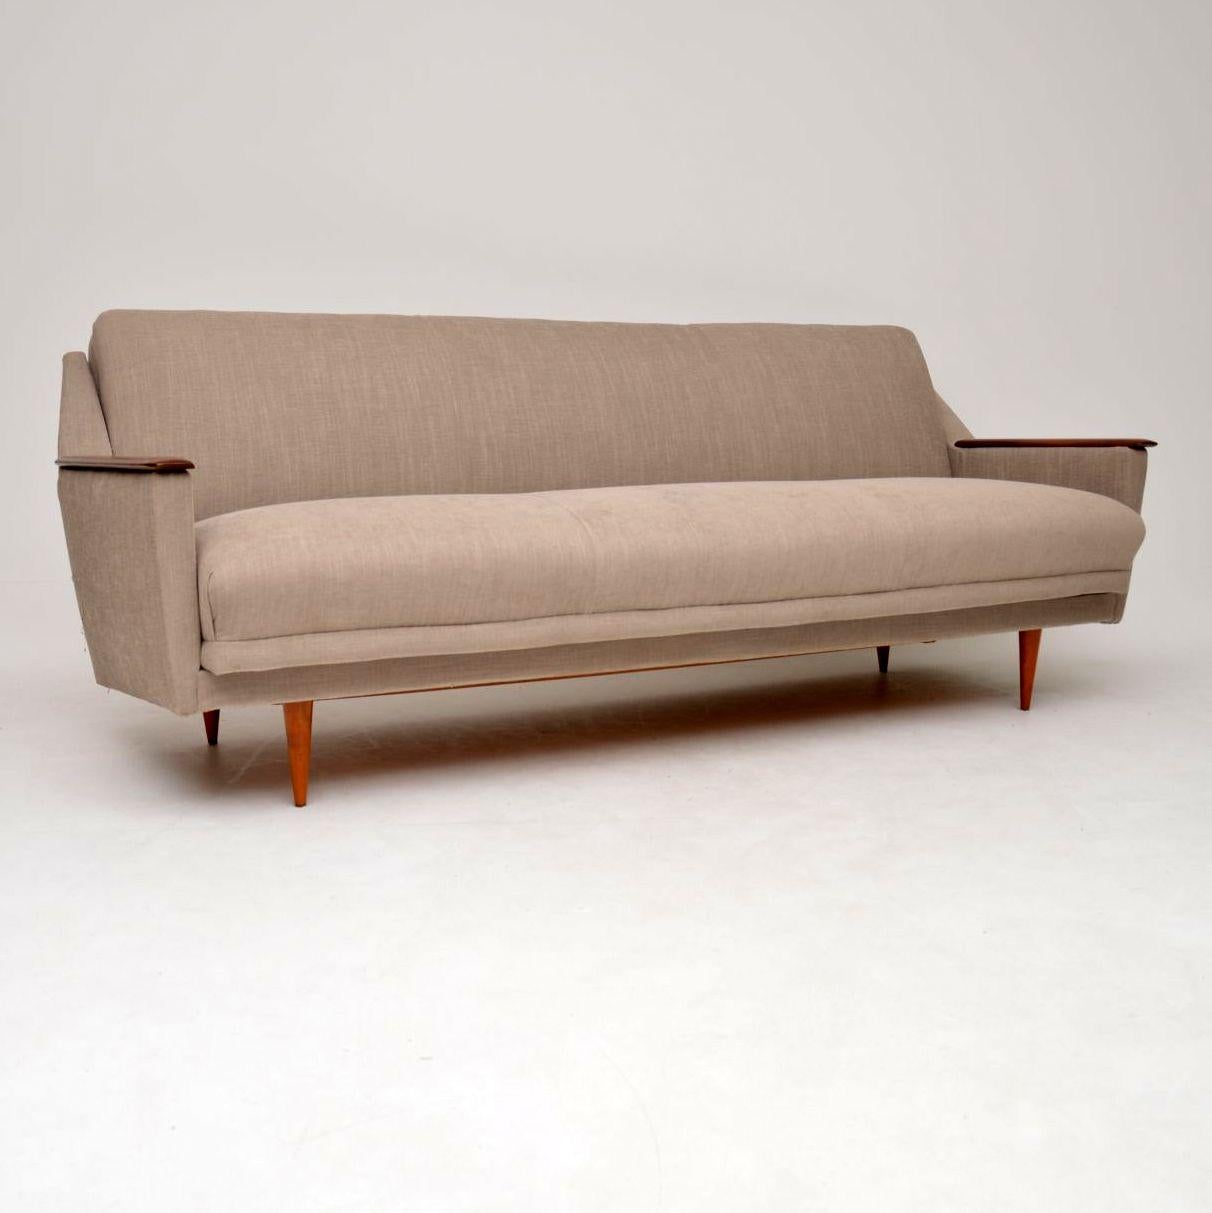 Mid-Century Modern 1950s Danish Vintage Sofa Bed